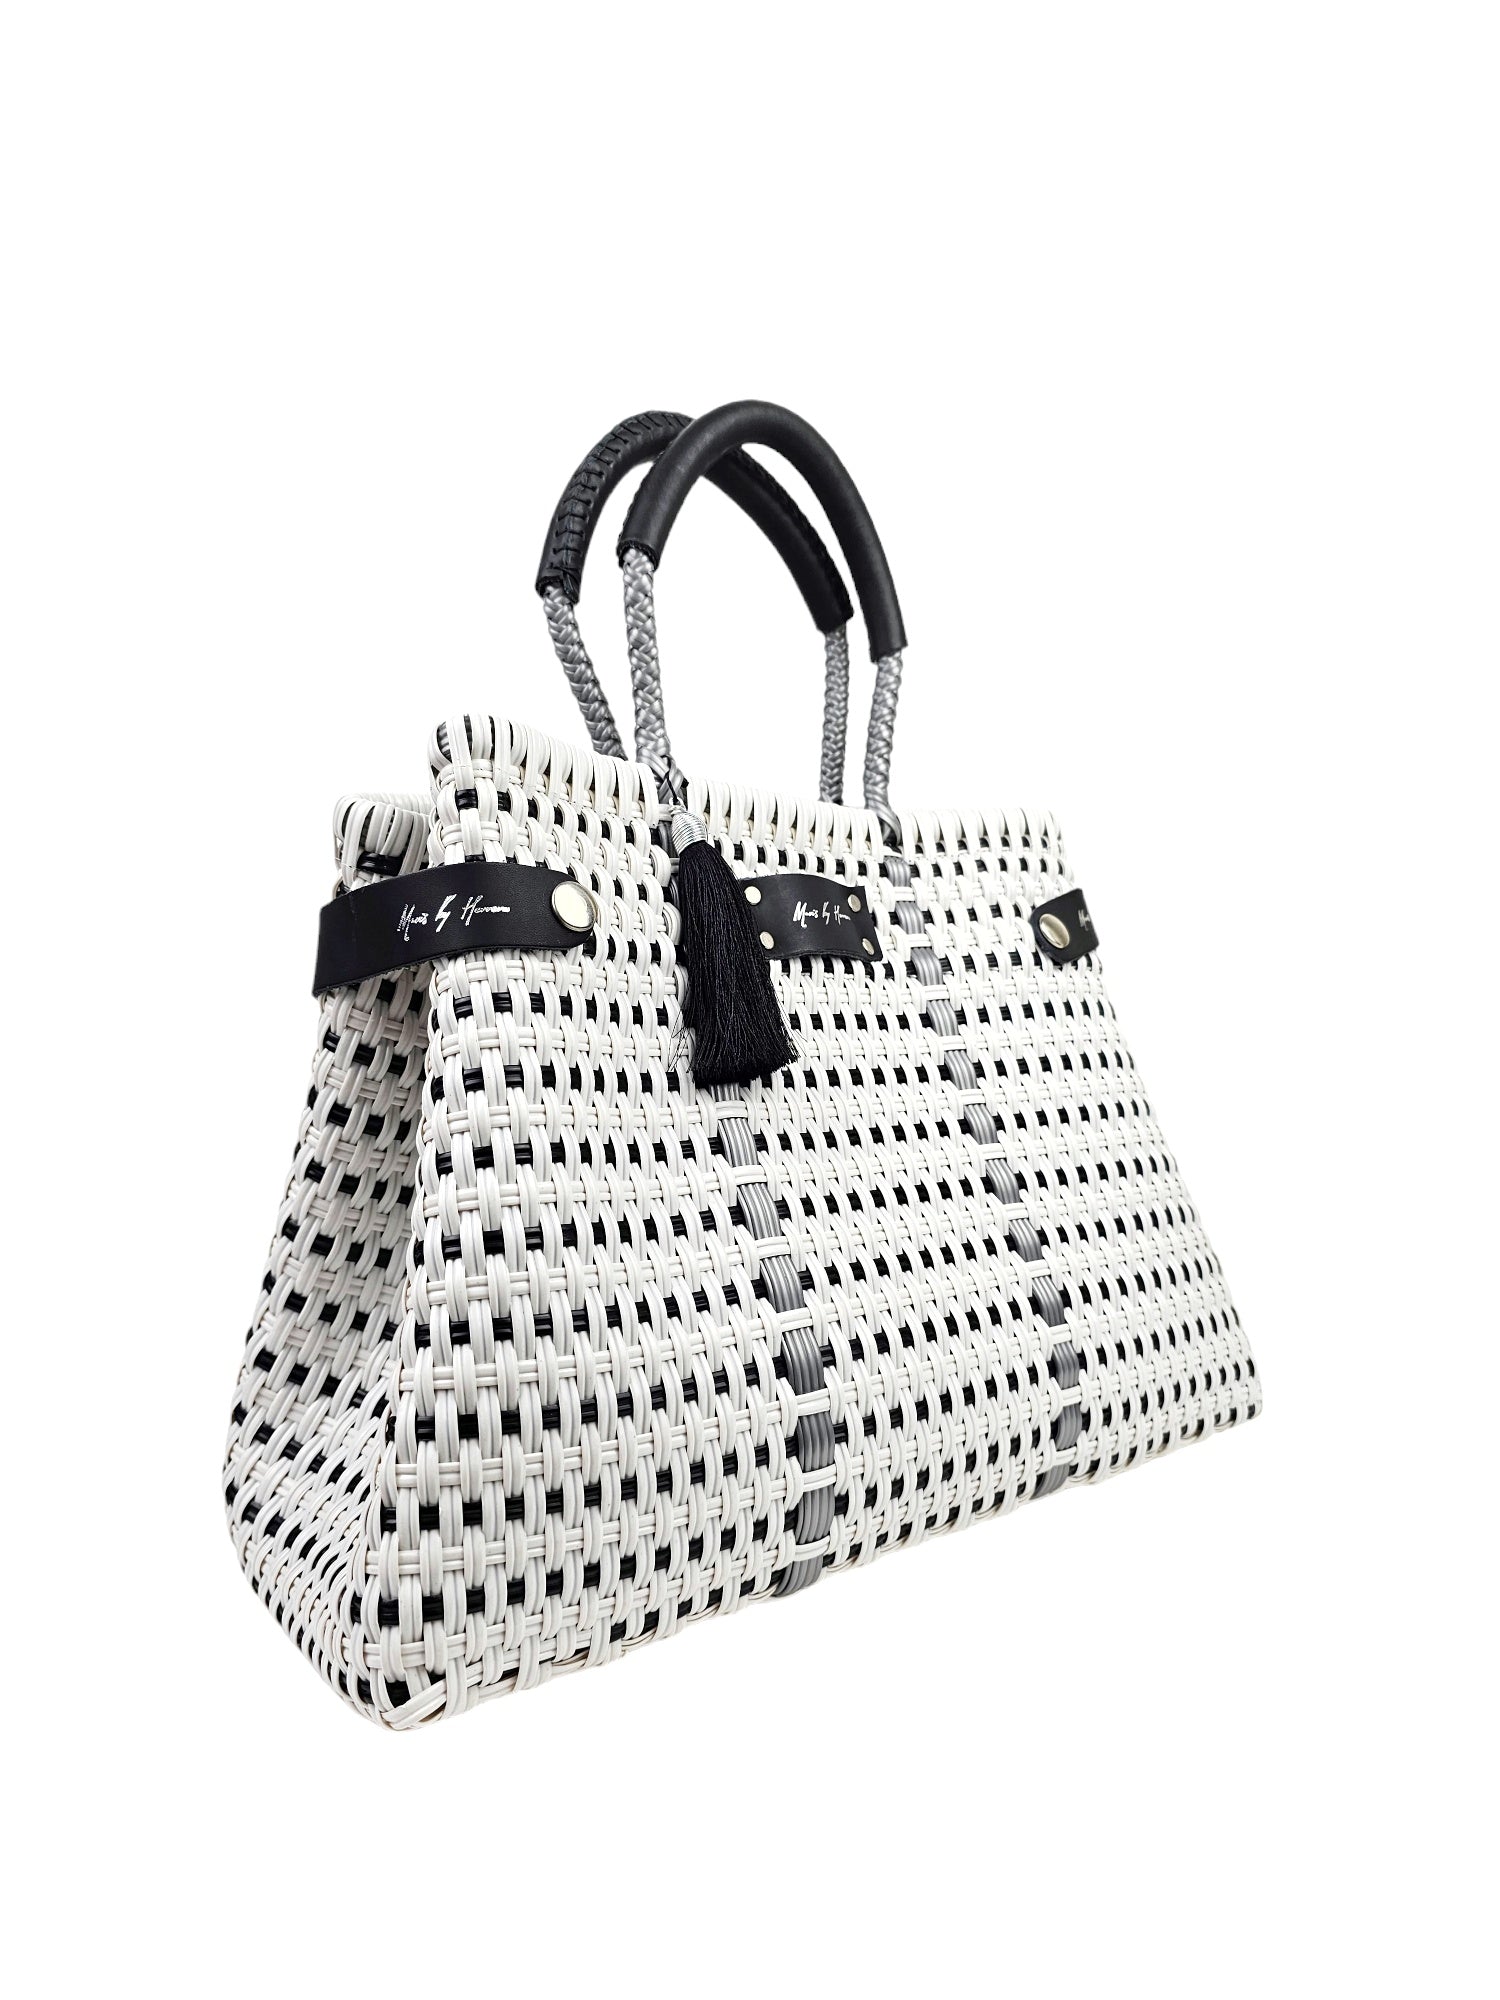 Mavis by Herrera Women's Luxury Sustainable Handbags